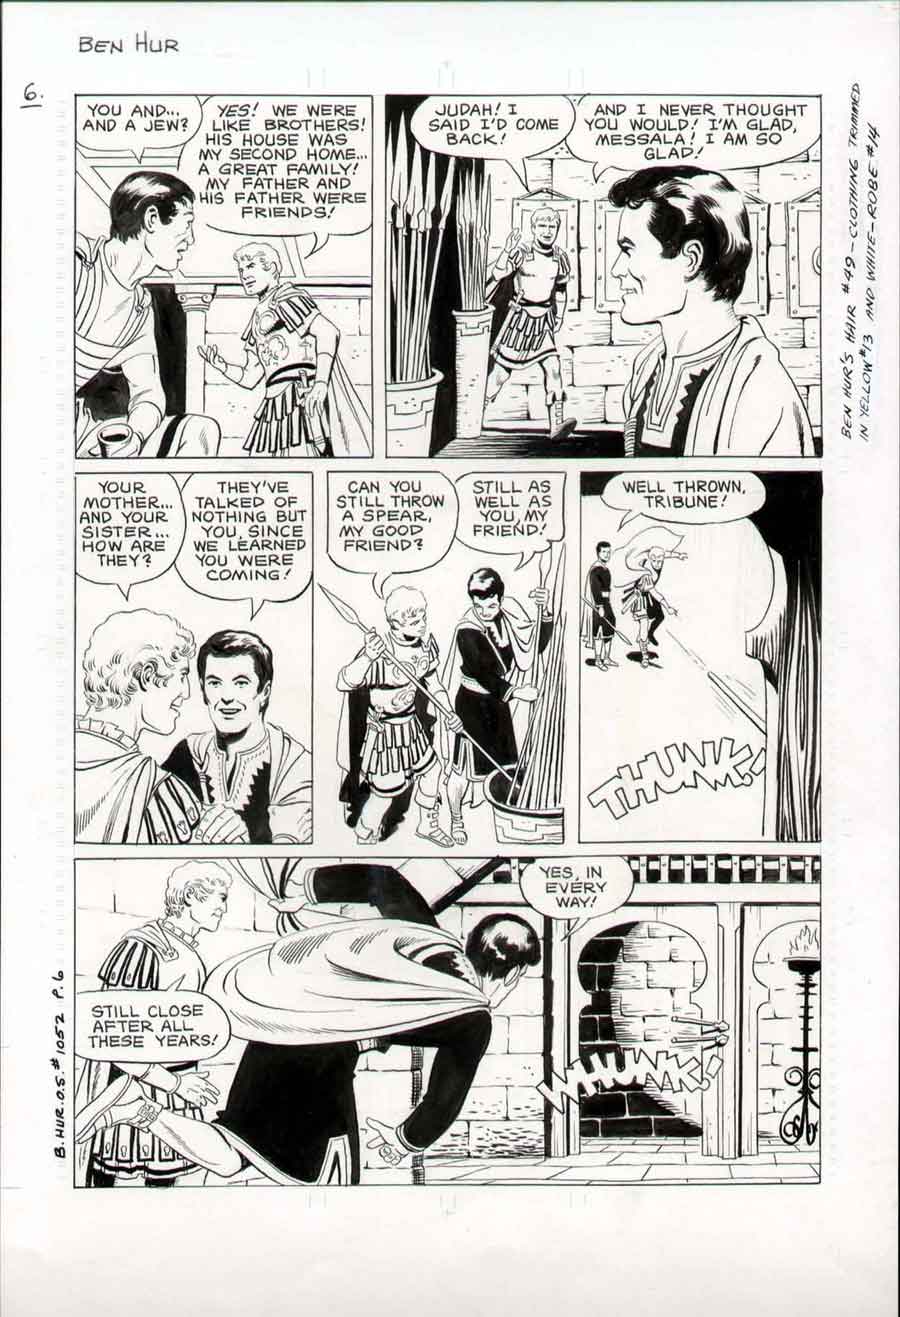 Russ Manning original dell 1950s golden age comic book page artwork - Ben Hur / Four Color Comics v2 #1052